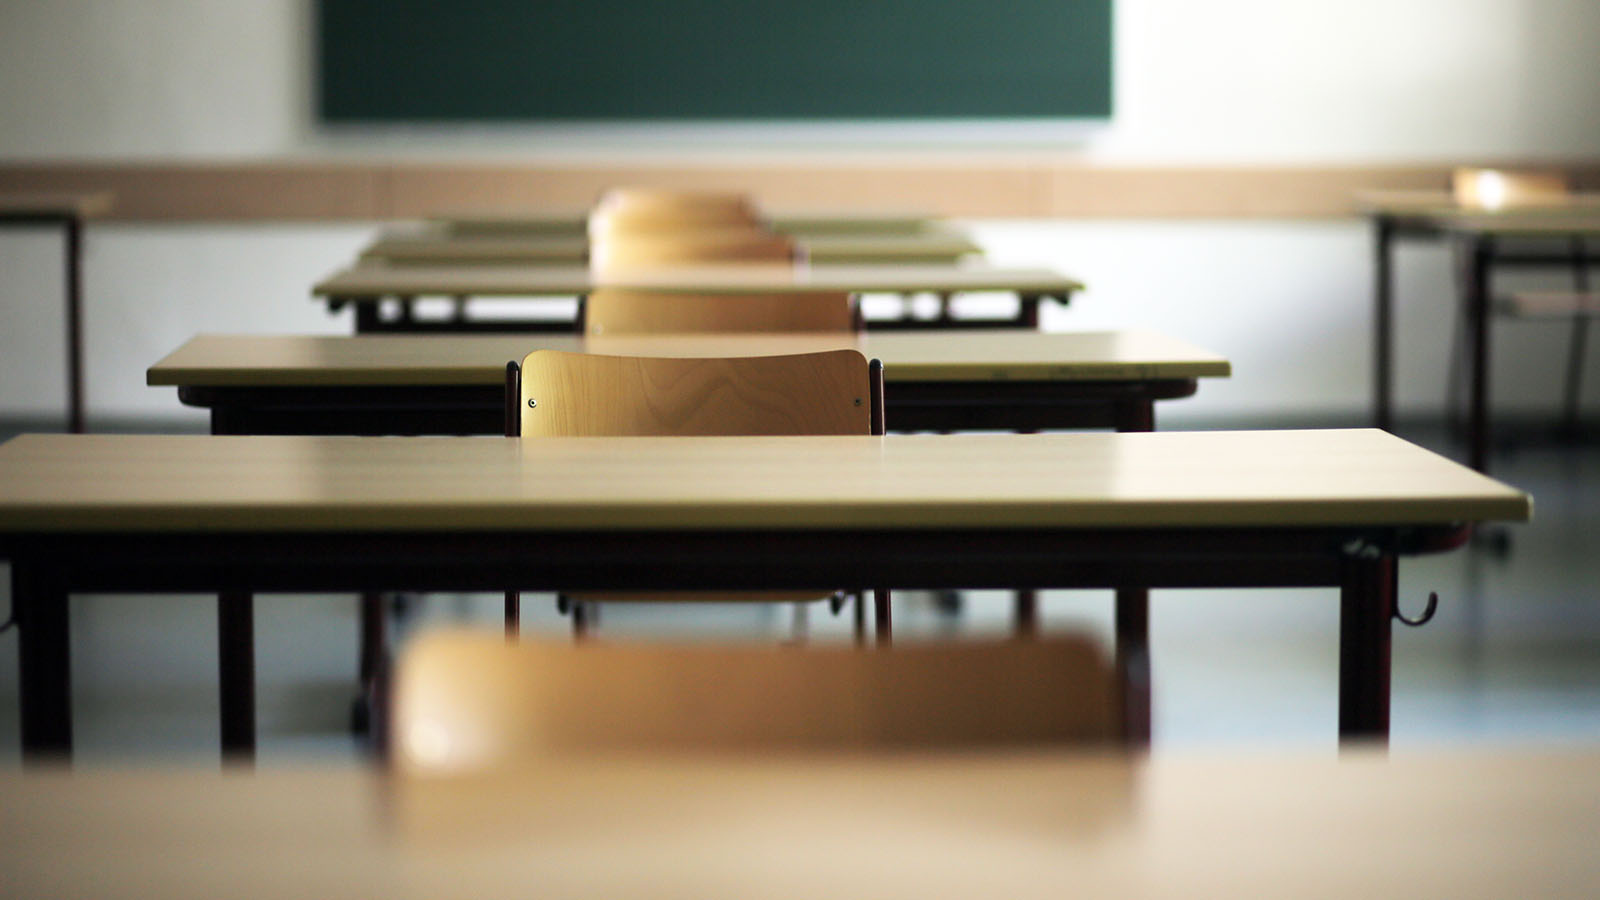 Unexplained school absences sudden deterioration of grades